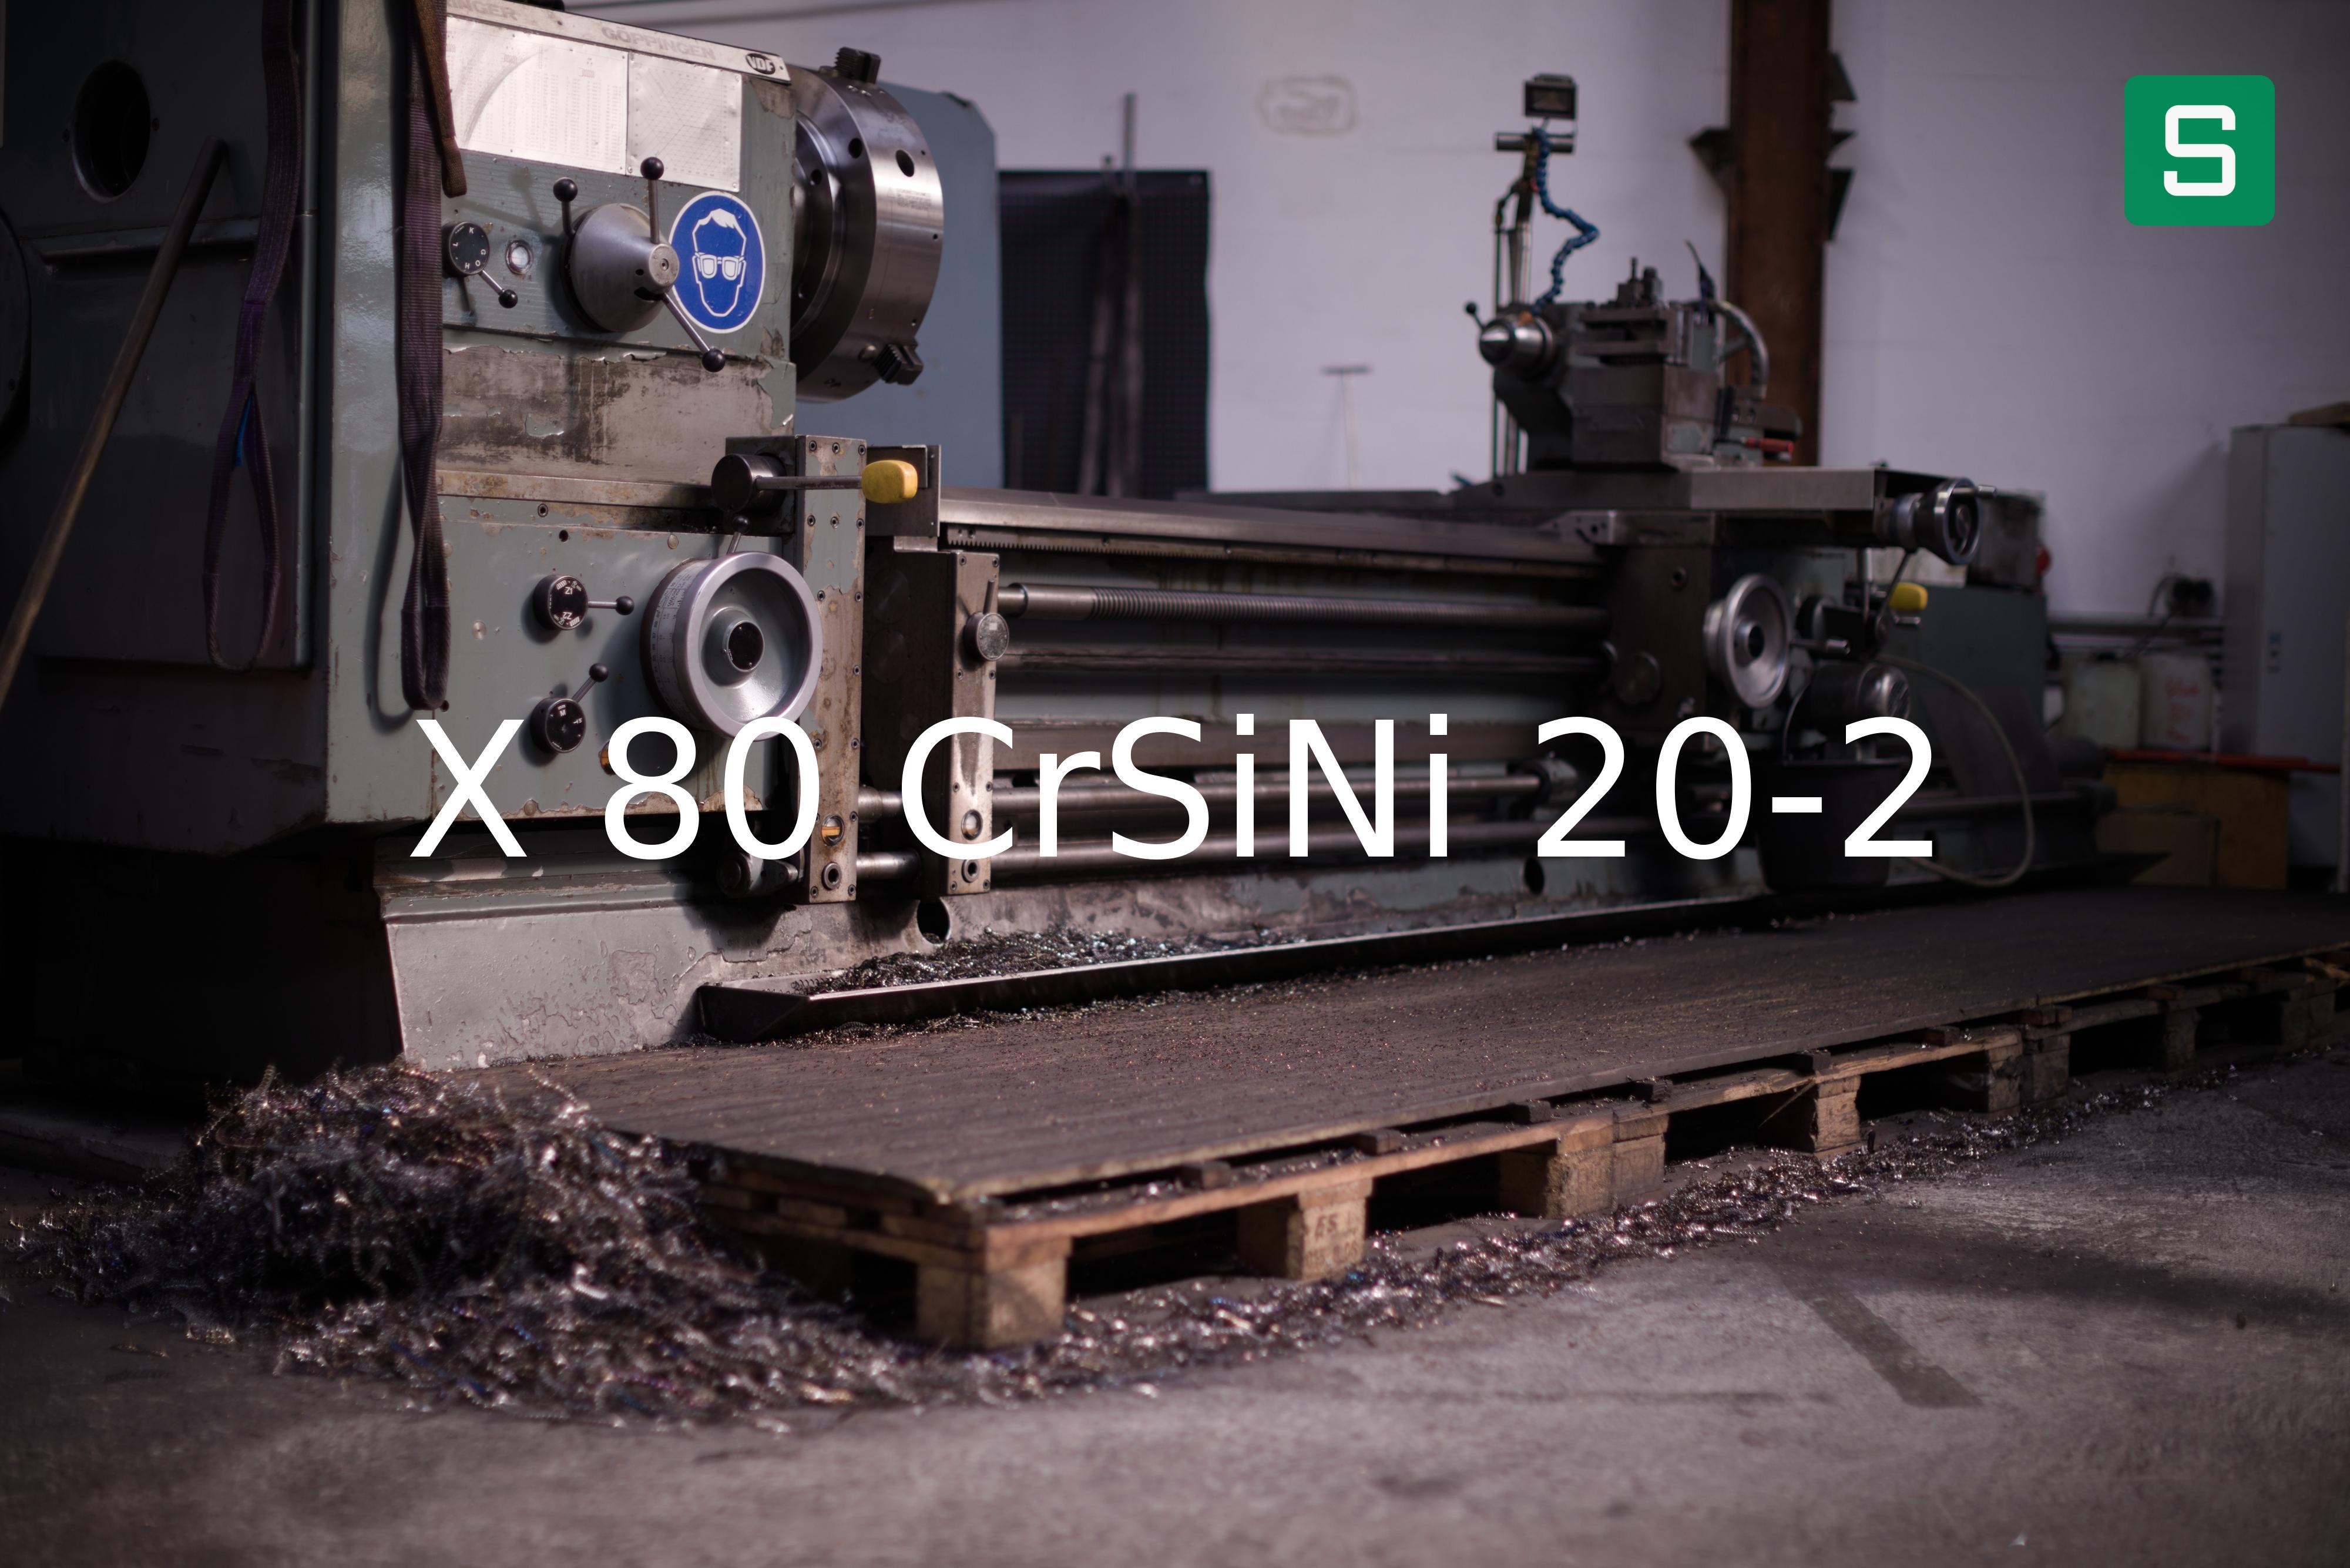 Steel Material: X 80 CrSiNi 20-2